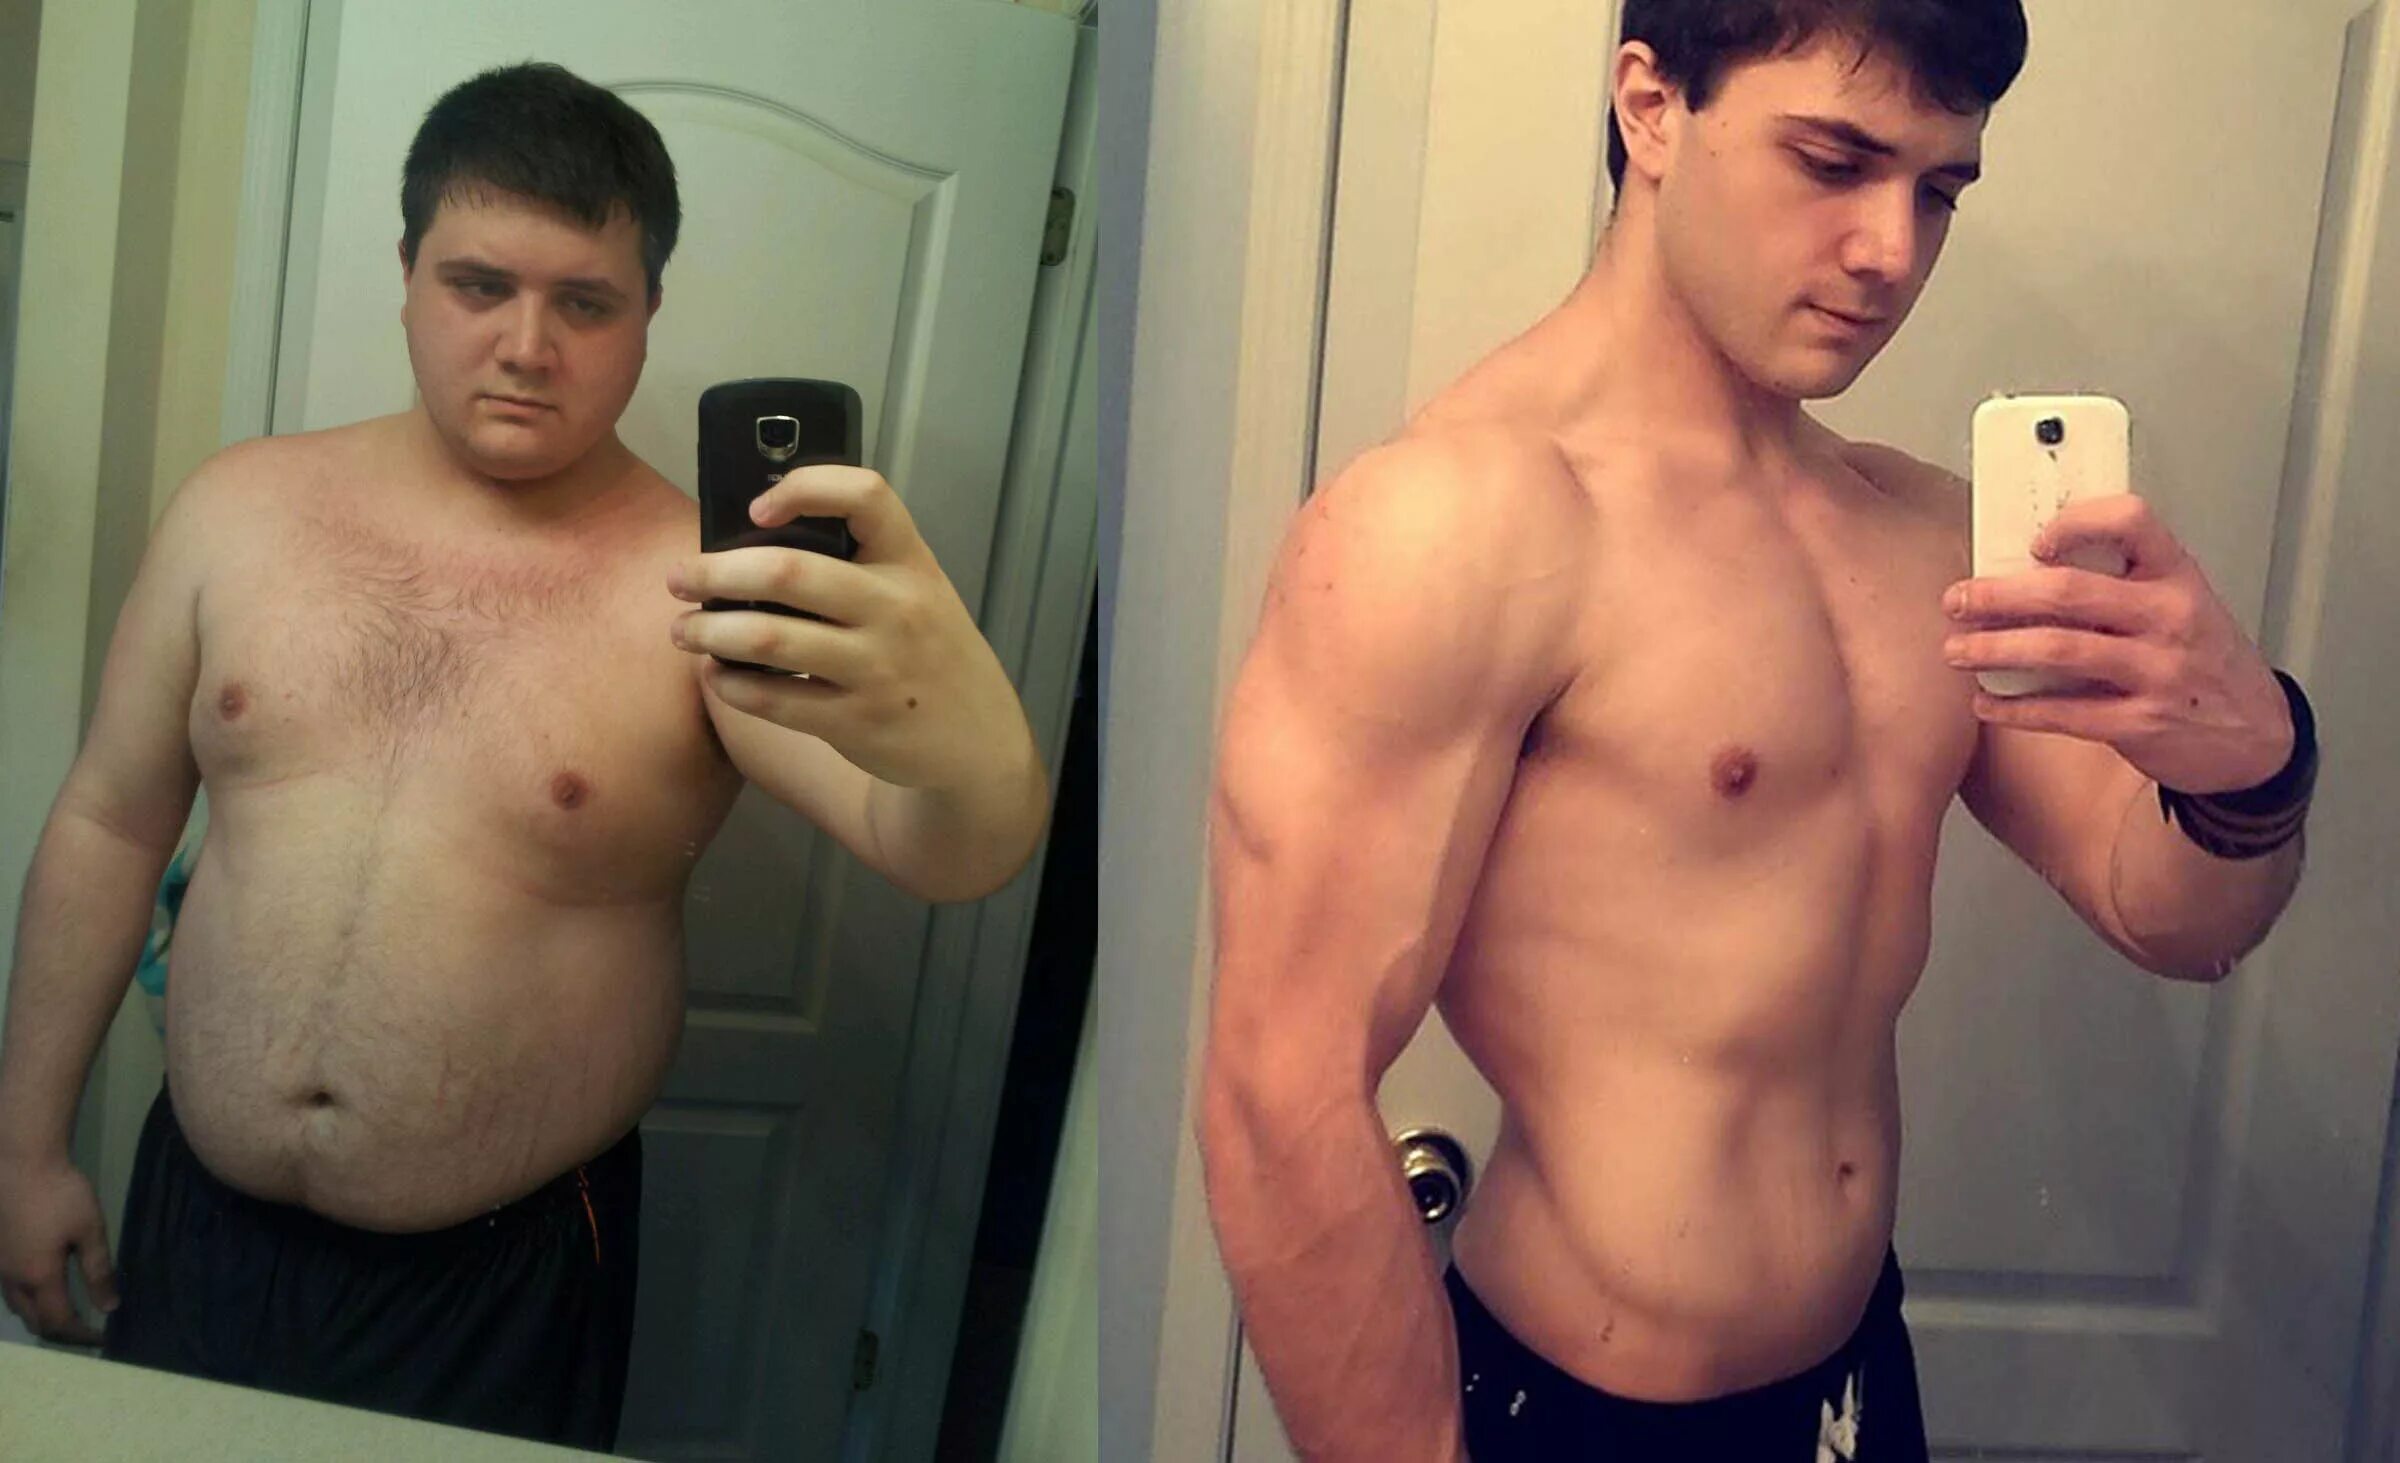 0 95 кг. Парни до и после похудения. Похудение до и после фото мужчины.